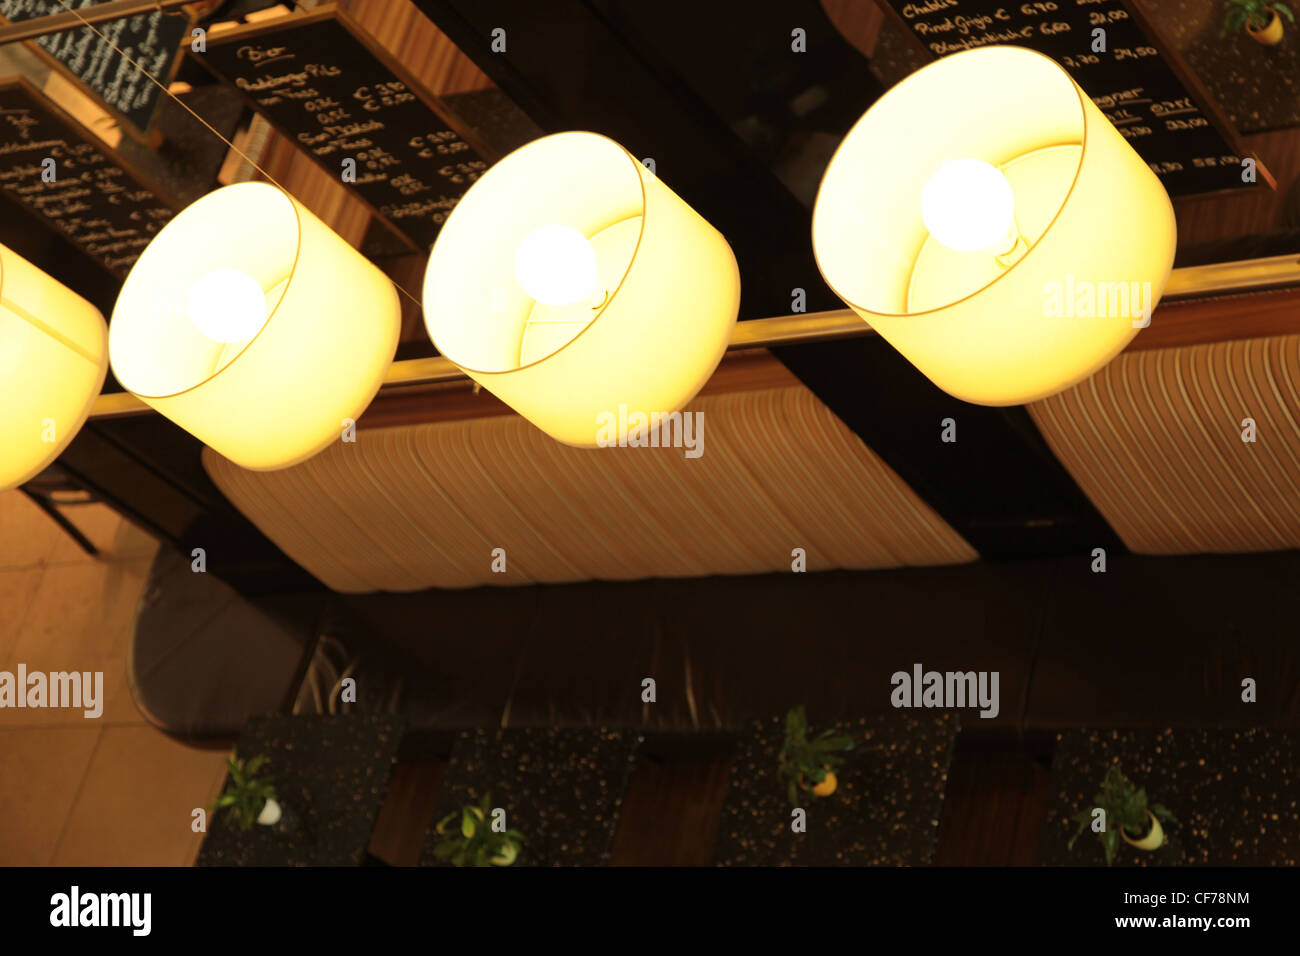 Stimmungsvolle Beleuchtungsszene, Illuminated full with atmosphere Stock Photo